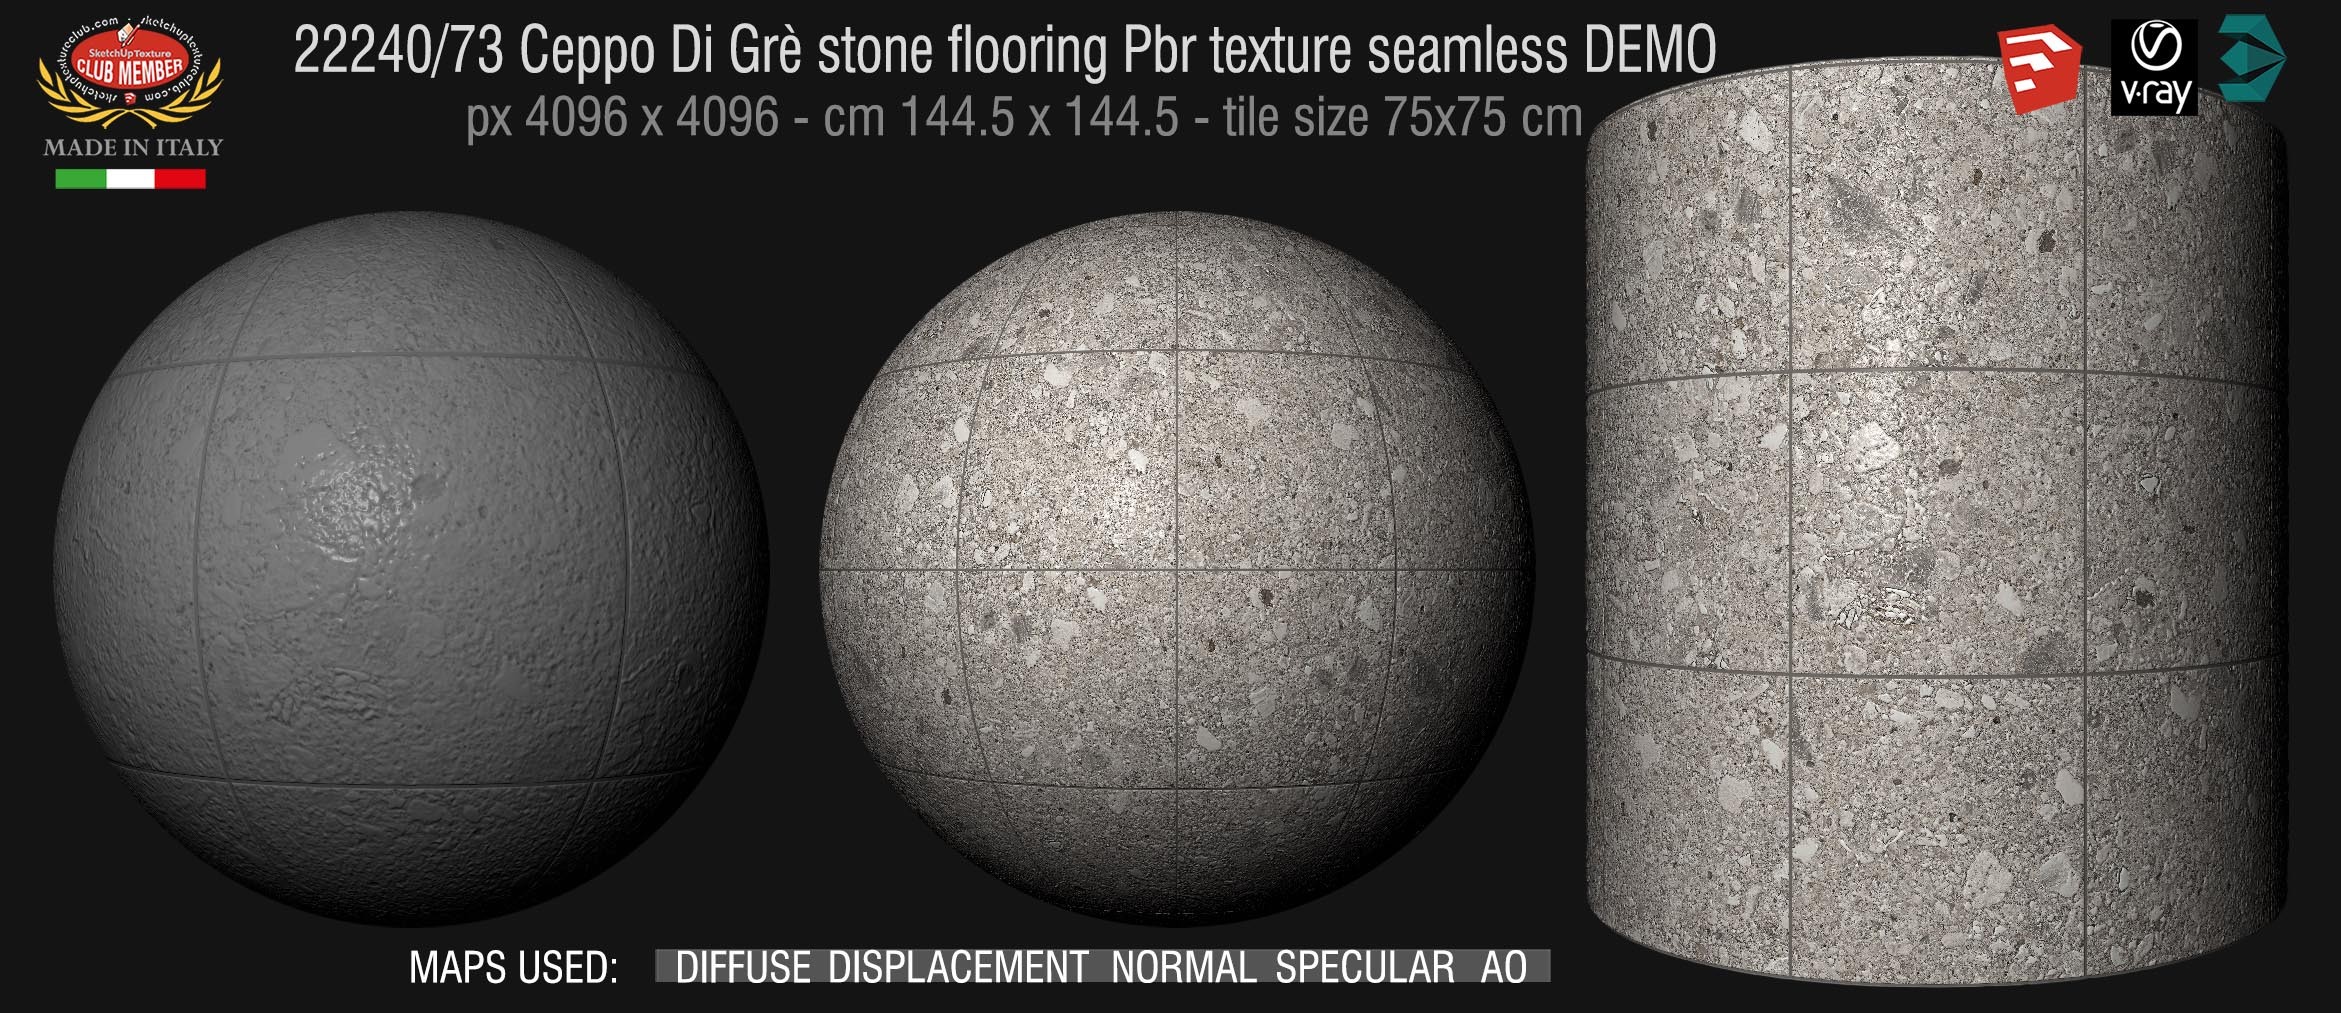 22240_73 Ceppo Di Grè stone flooring Pbr texture seamless DEMO - INTERIOR / OUTDOOR Paving - tile size 75x75 cm